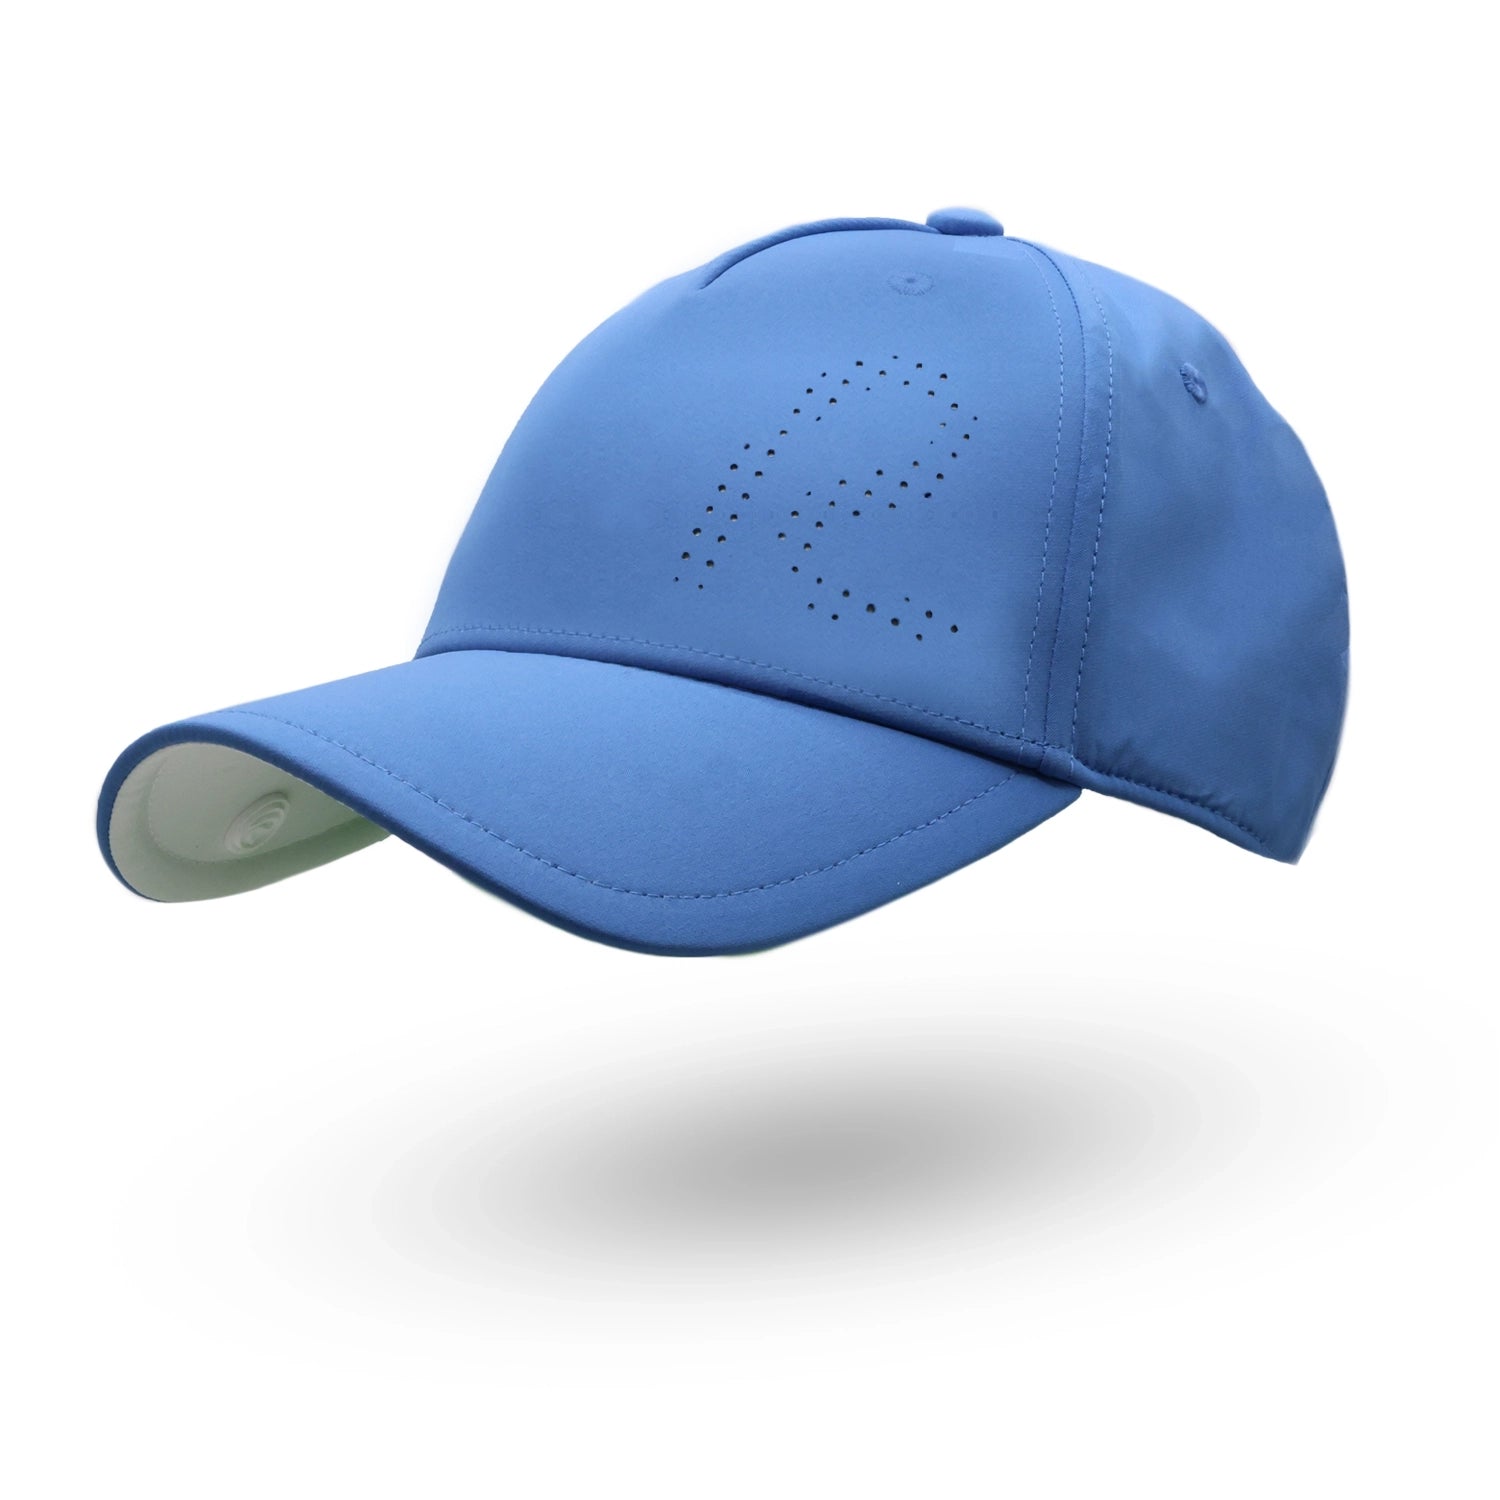 Rewired Matrix Baseball Cap - Blue/White